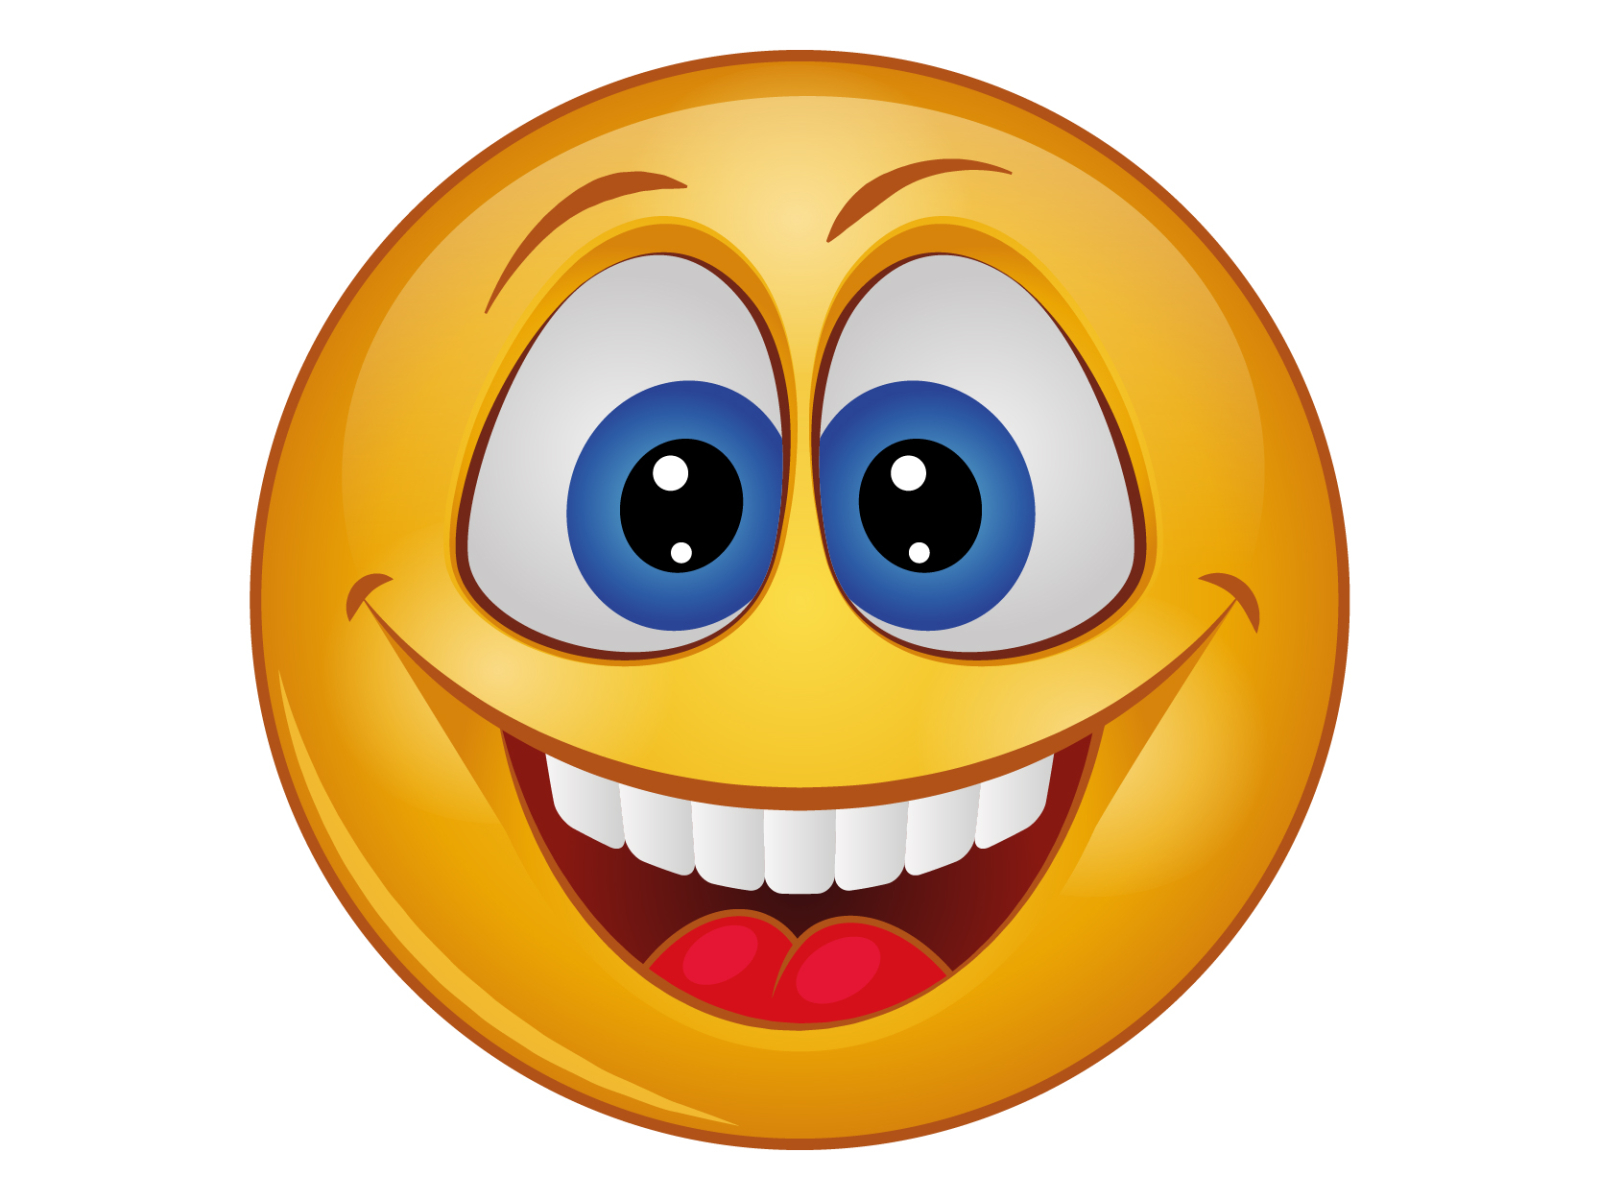 Smiling Face Emoji Images - IMAGESEE